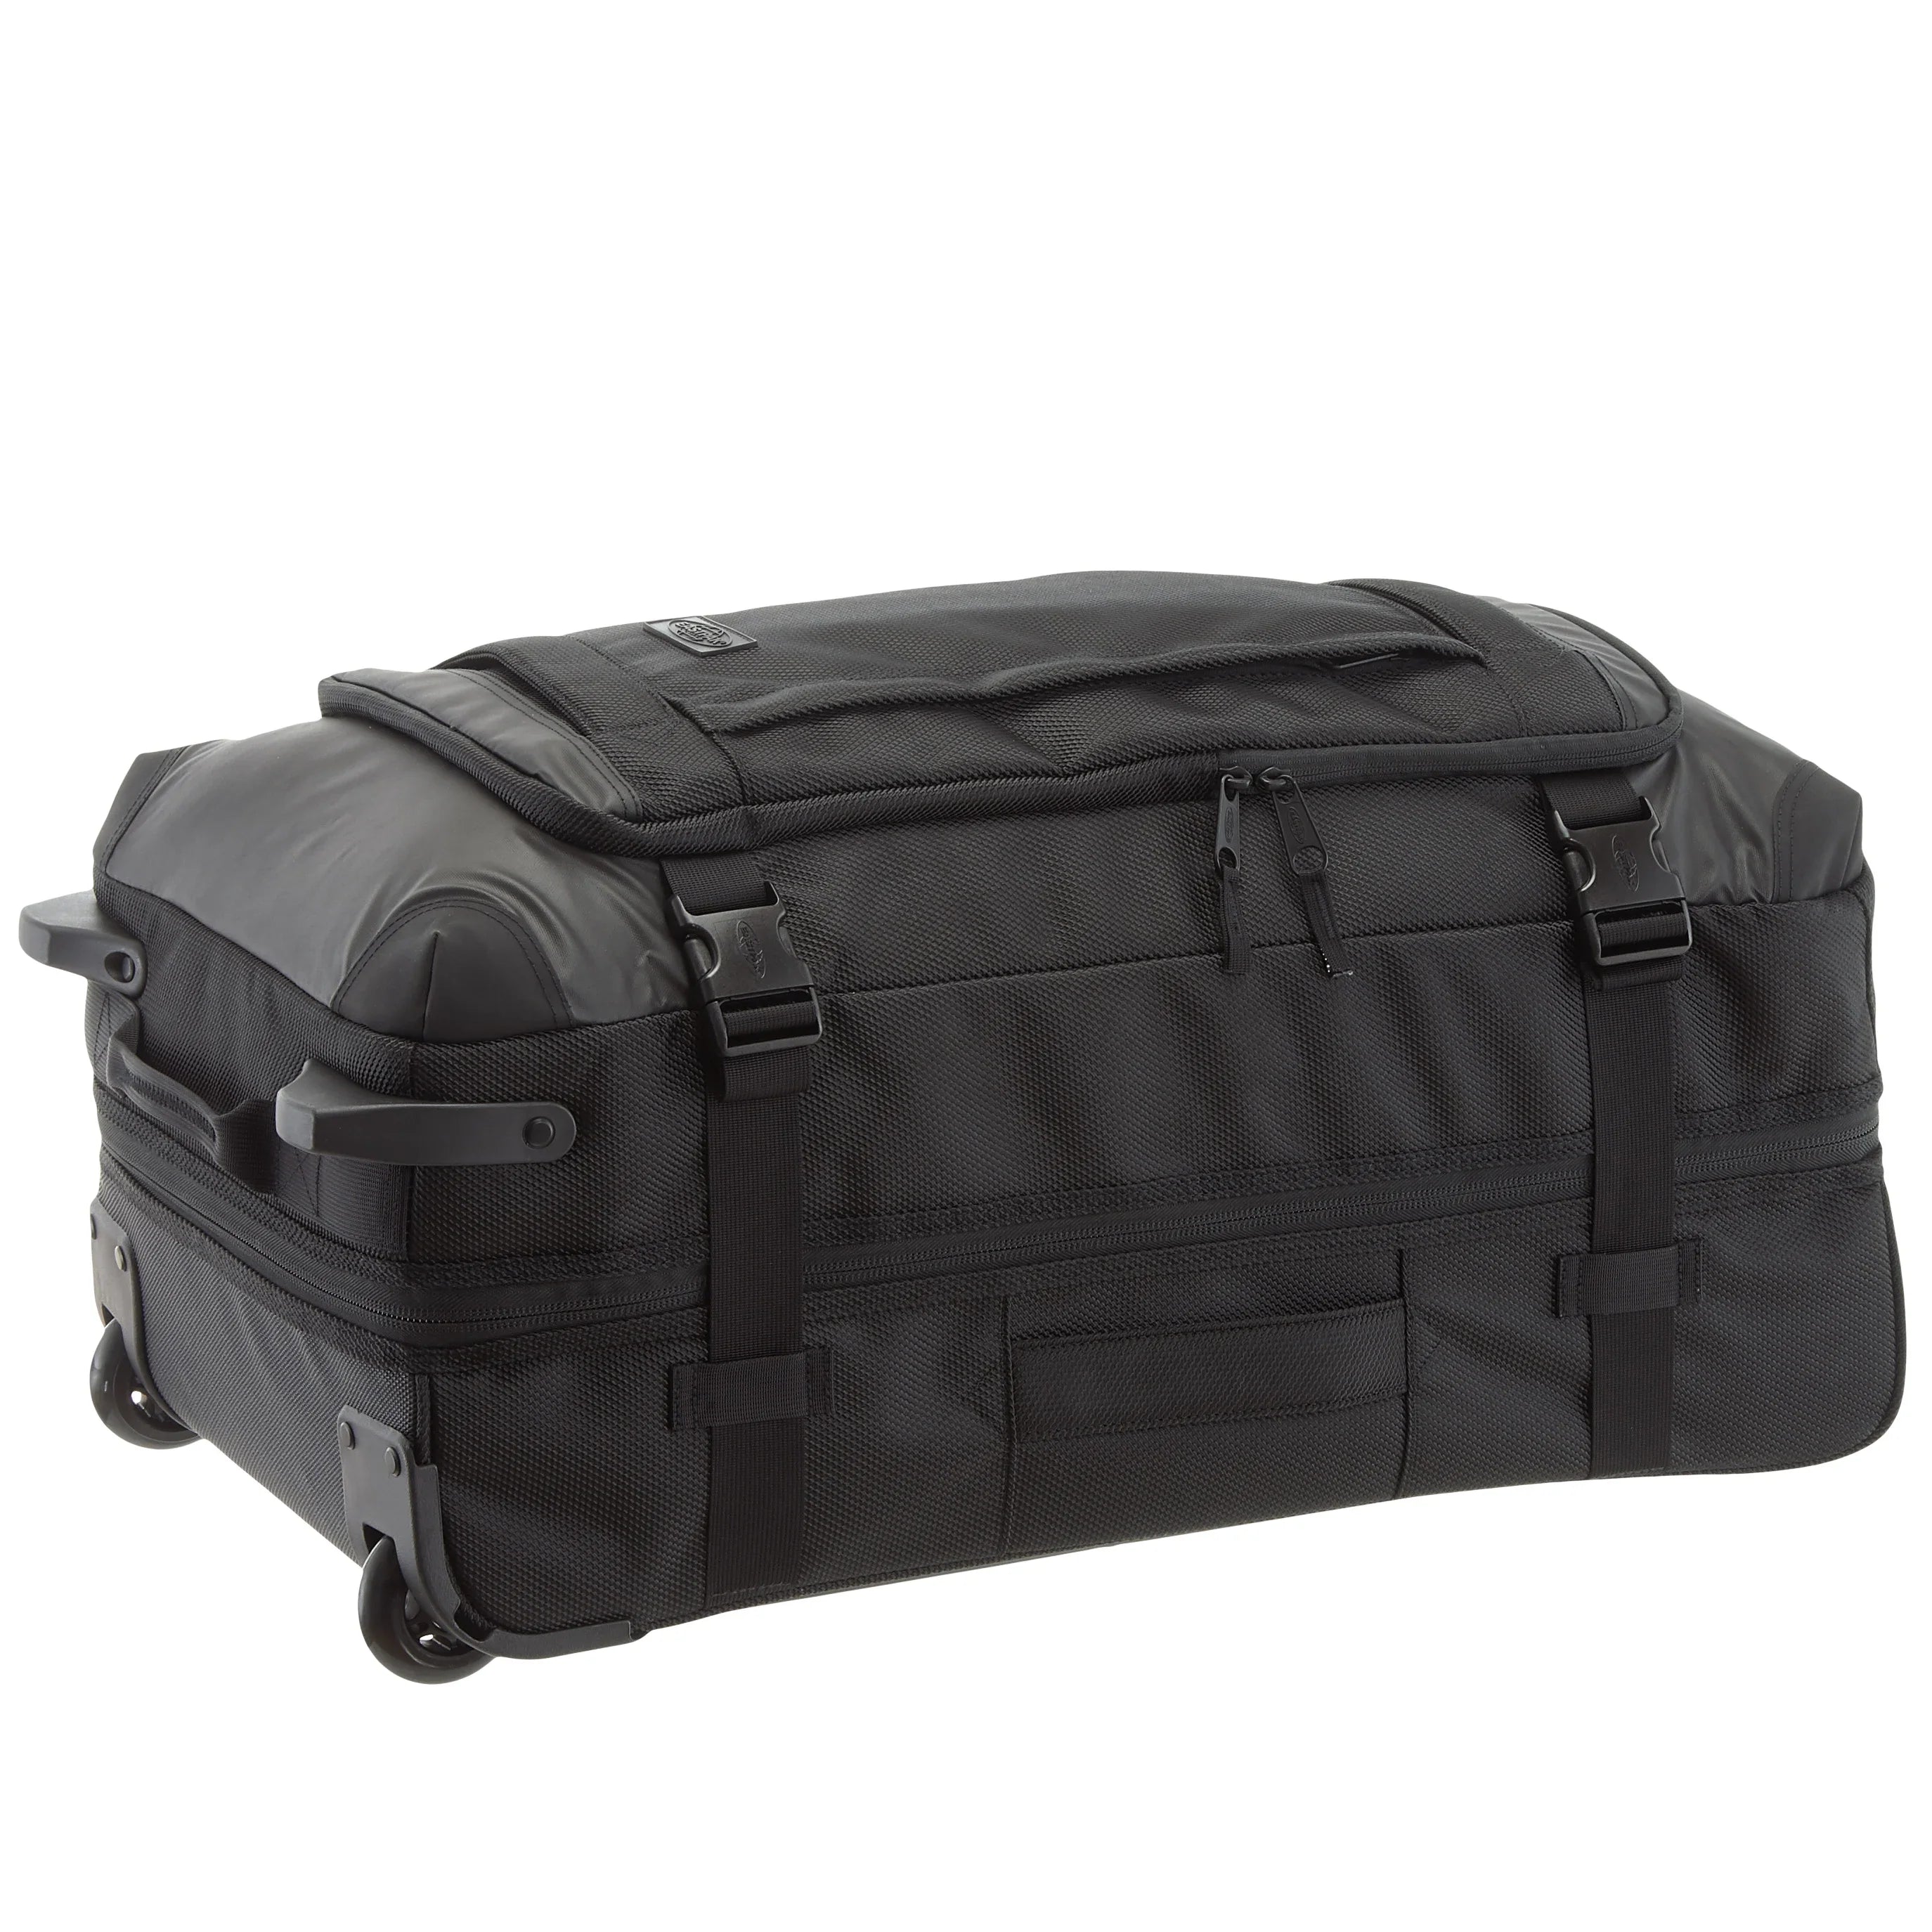 Eastpak Authentic Travel Tranverz CNNCT Rolling Travel Bag 67 cm - Khaki